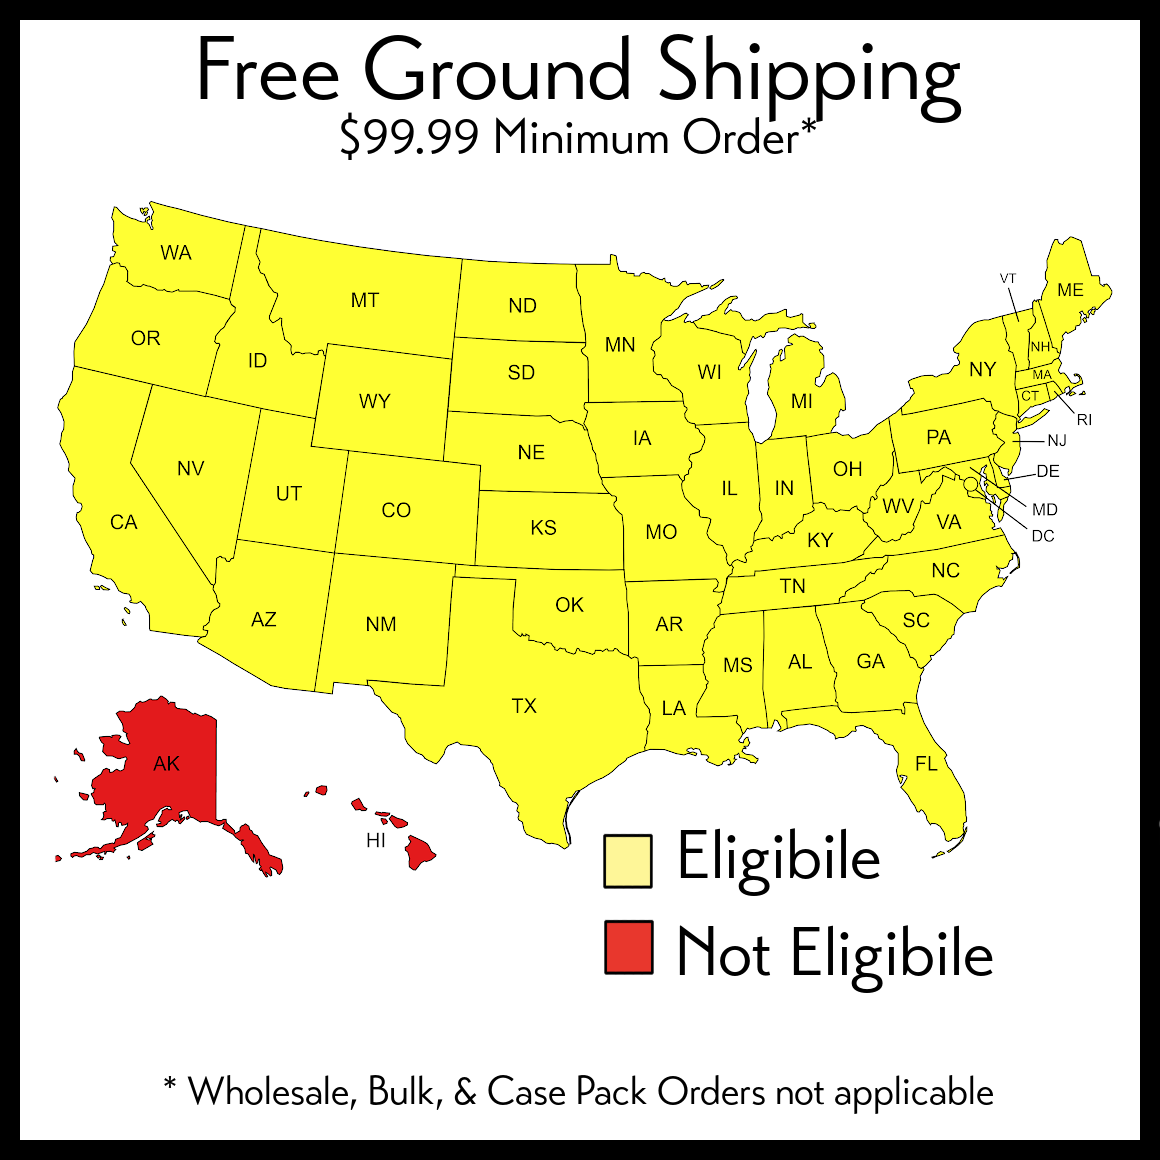 Free Shipping to USA